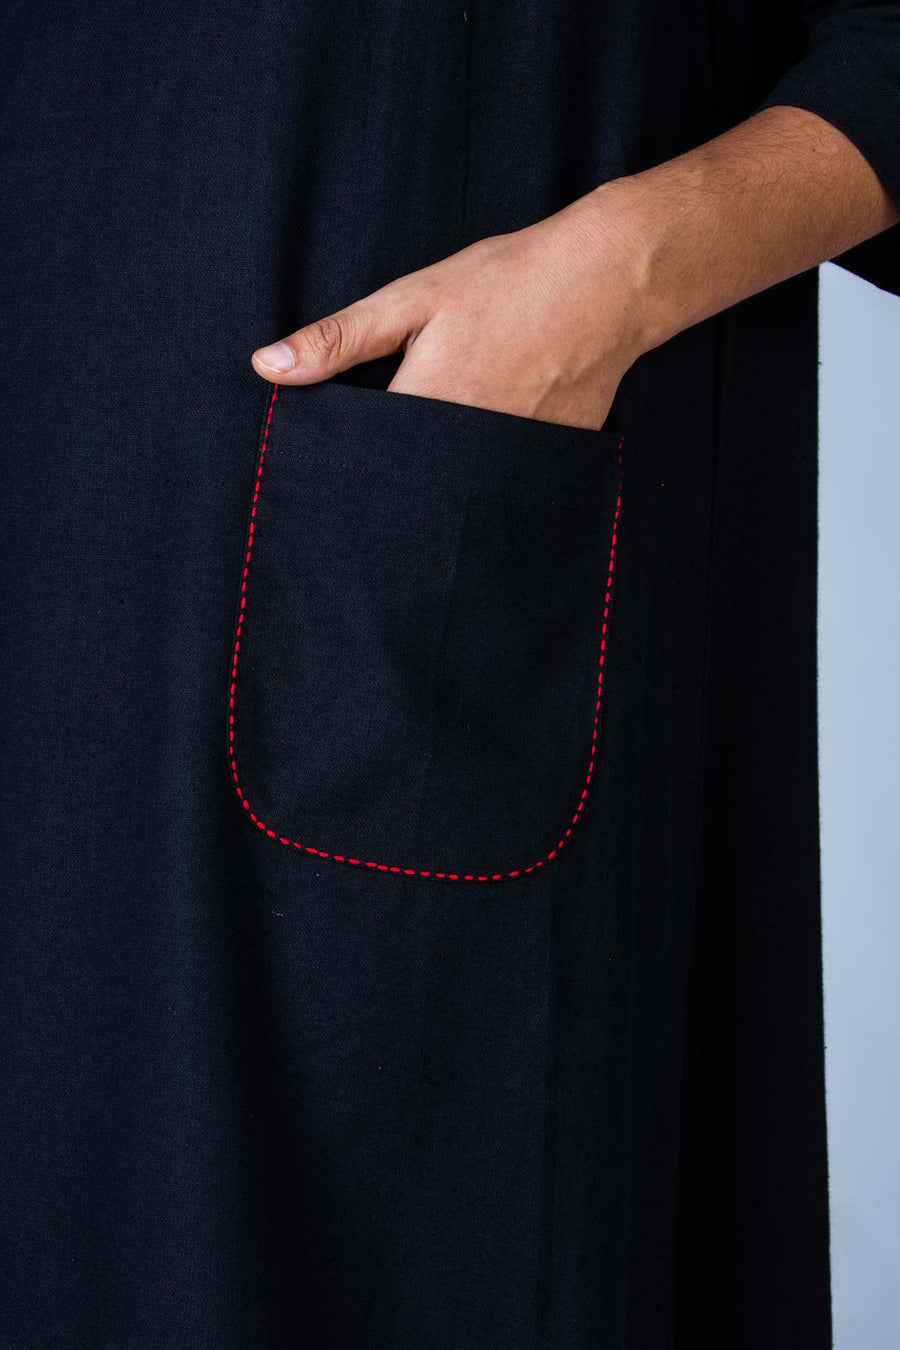 Black Khadi Dress - PARINA - Upasana Design Studio